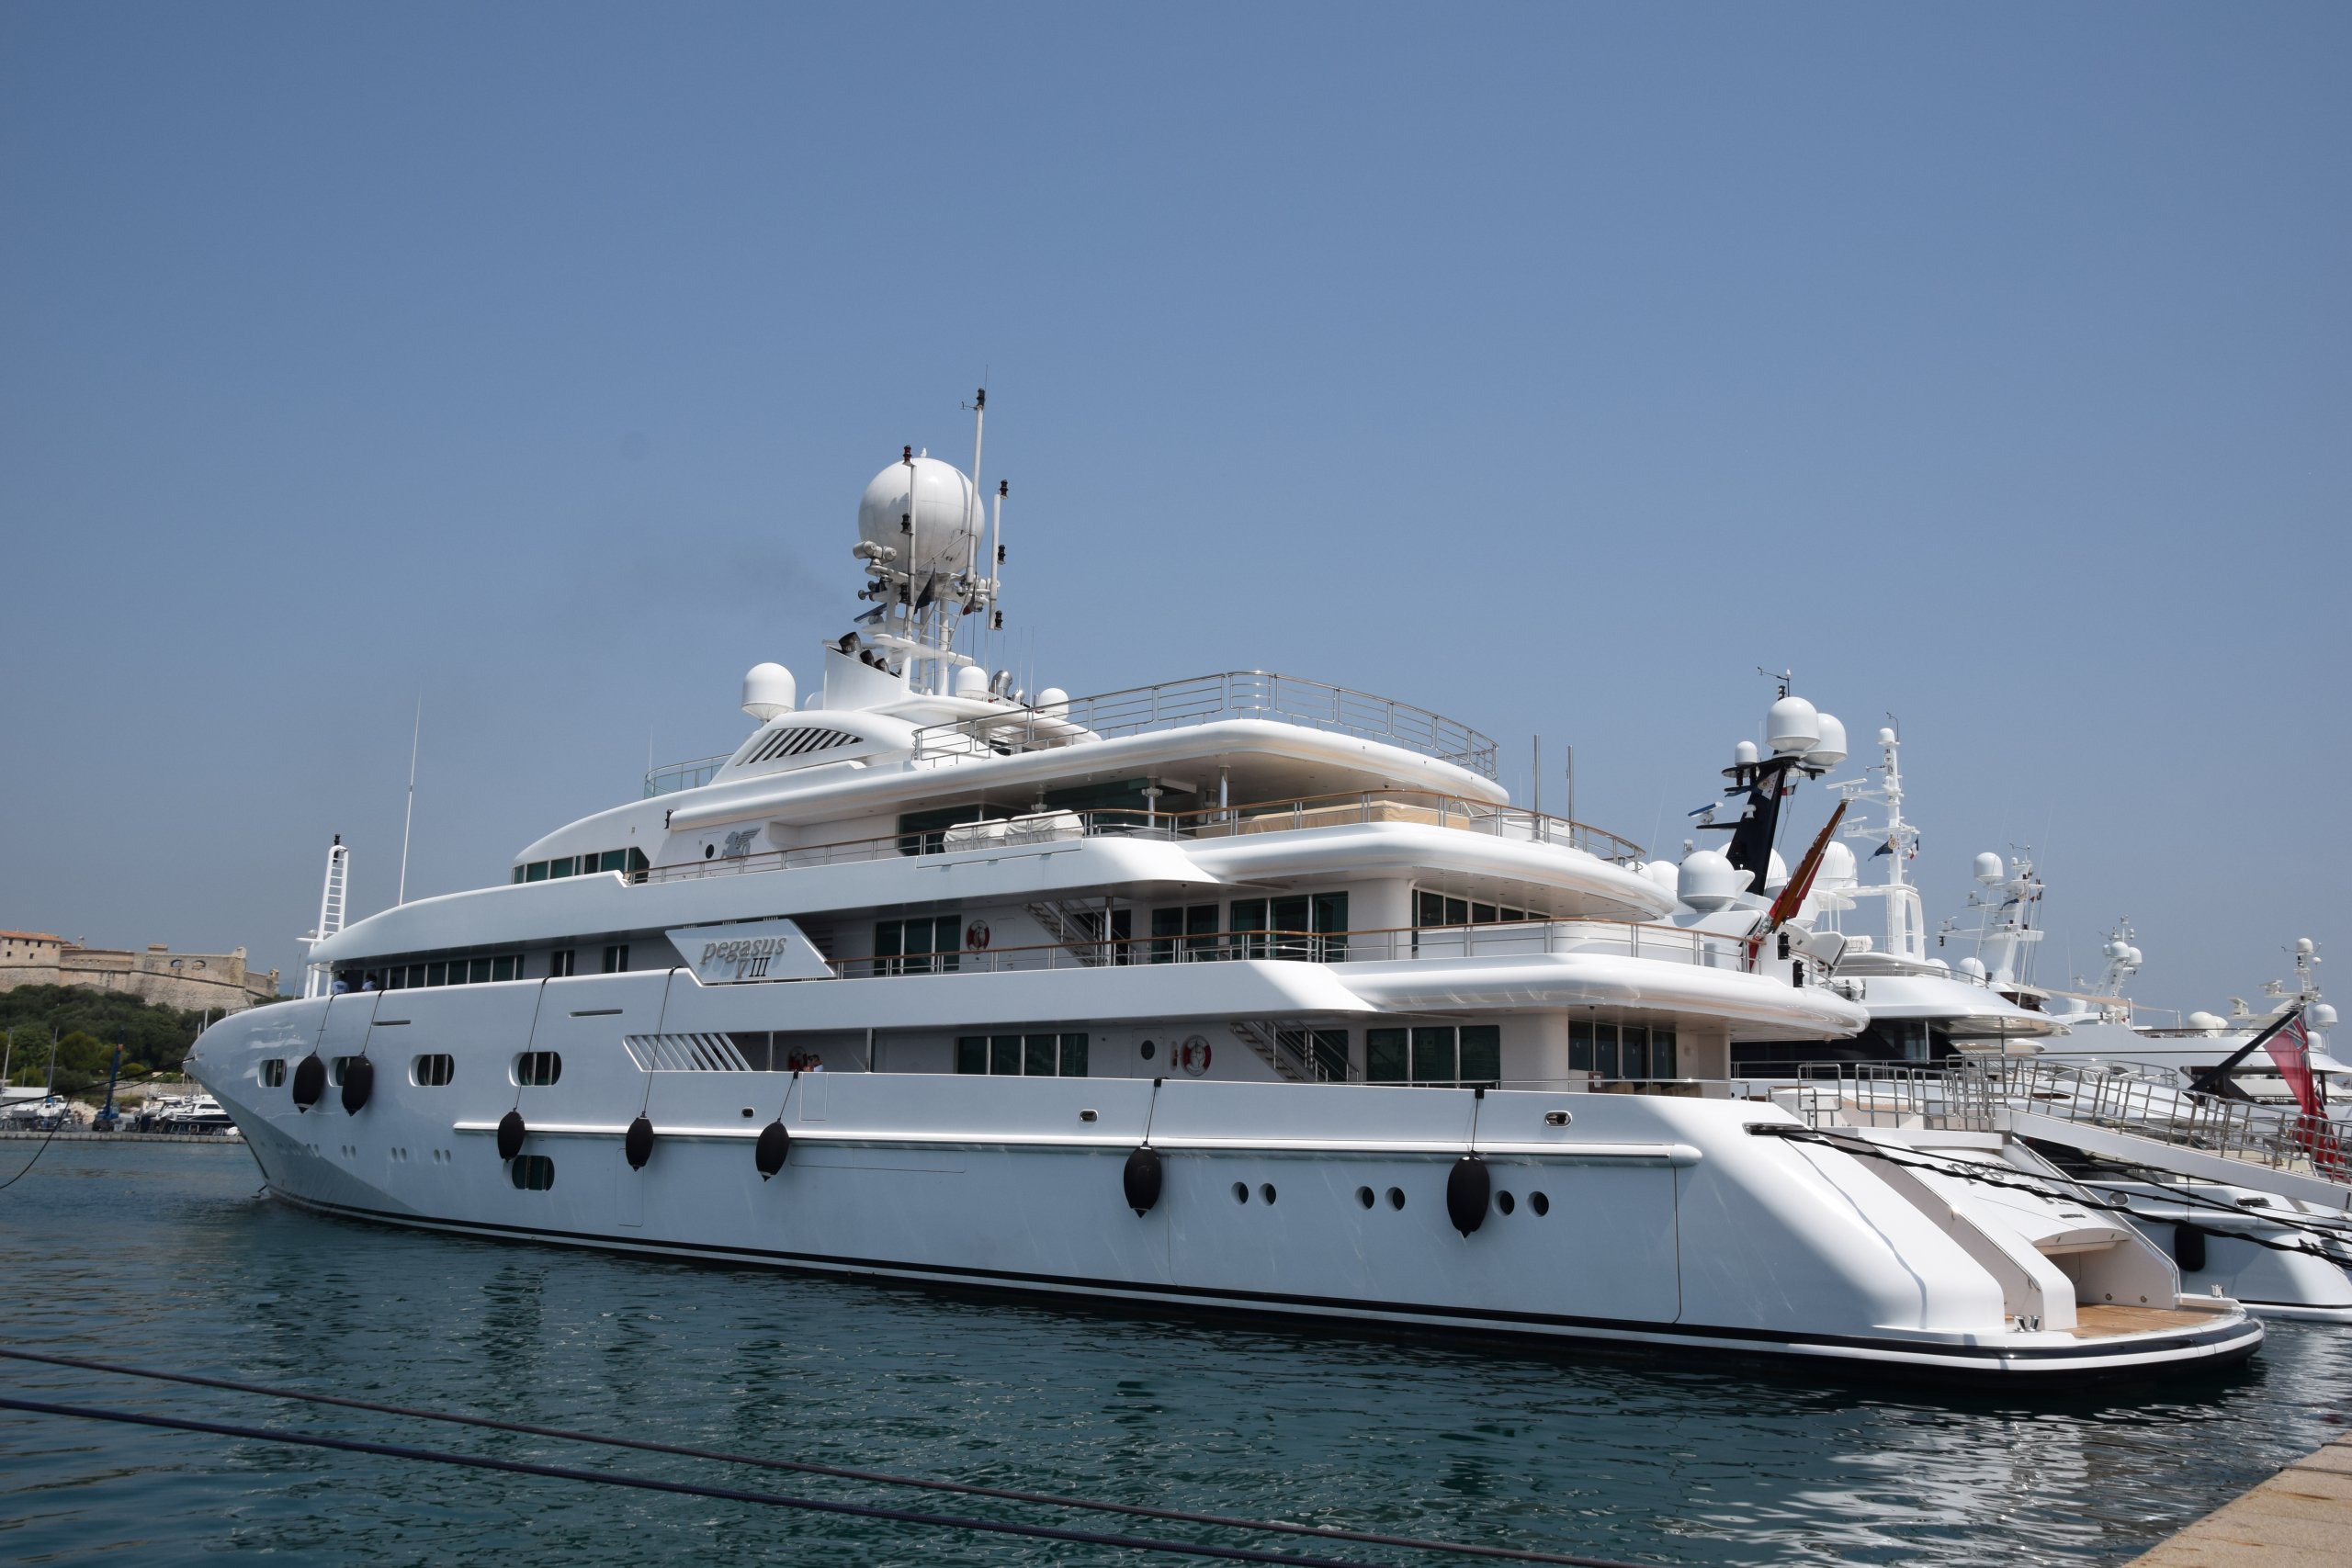 PEGASUS VIII Yacht • Mohammed bin Salman $120M Superyacht • Royal Denship • 2003